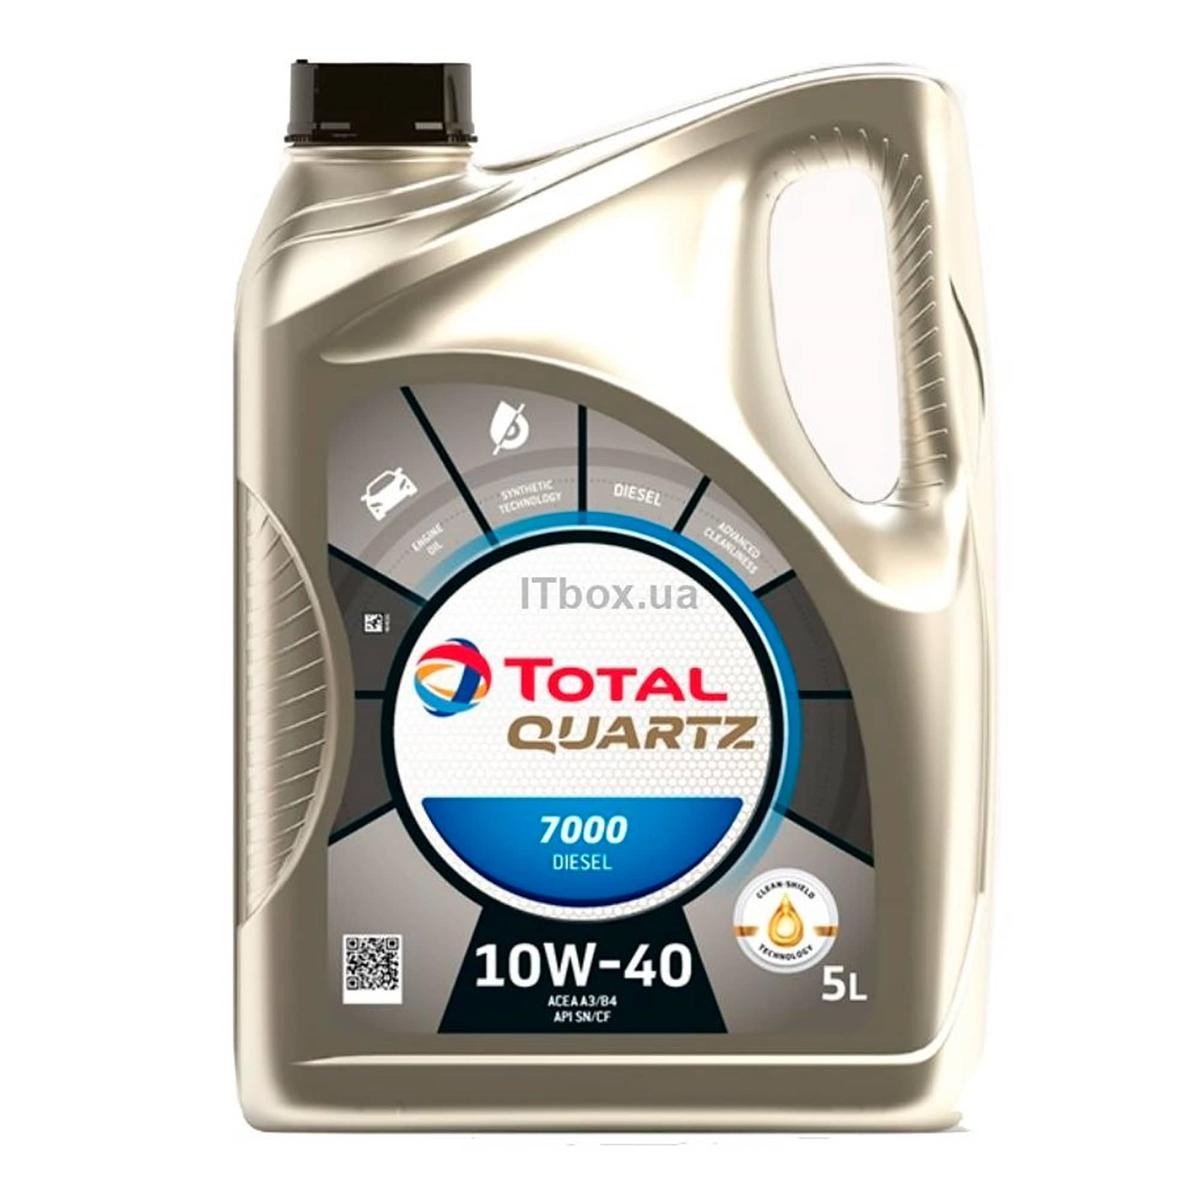 TOTAL Quartz, 7000 Diesel 10W-40, 5l, Part Synthetic Oil Motor oil 2202844 buy